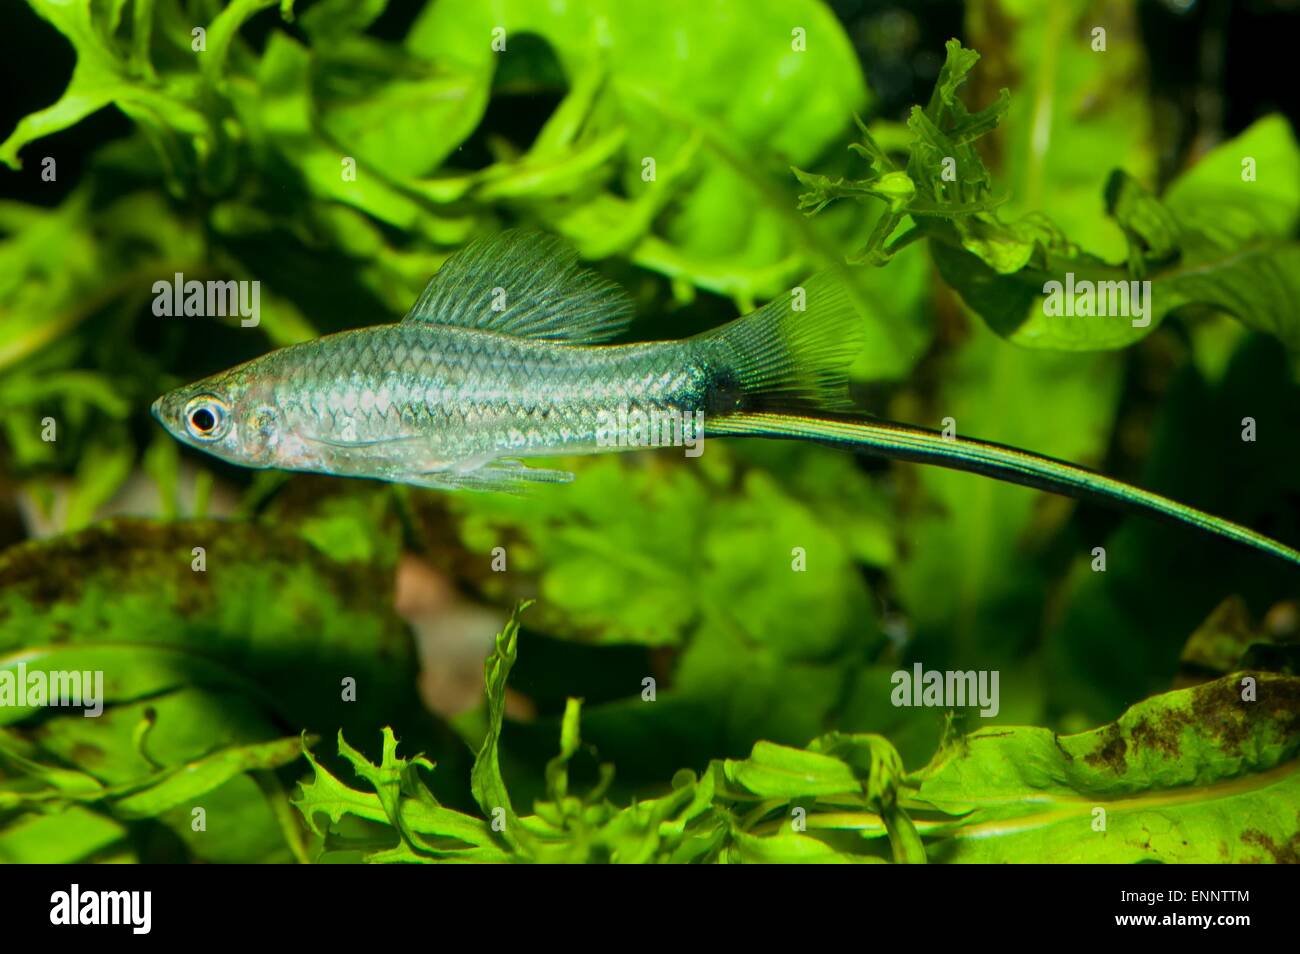 Tropical freshwater aquarium fish from genus Xiphophorus. Stock Photo